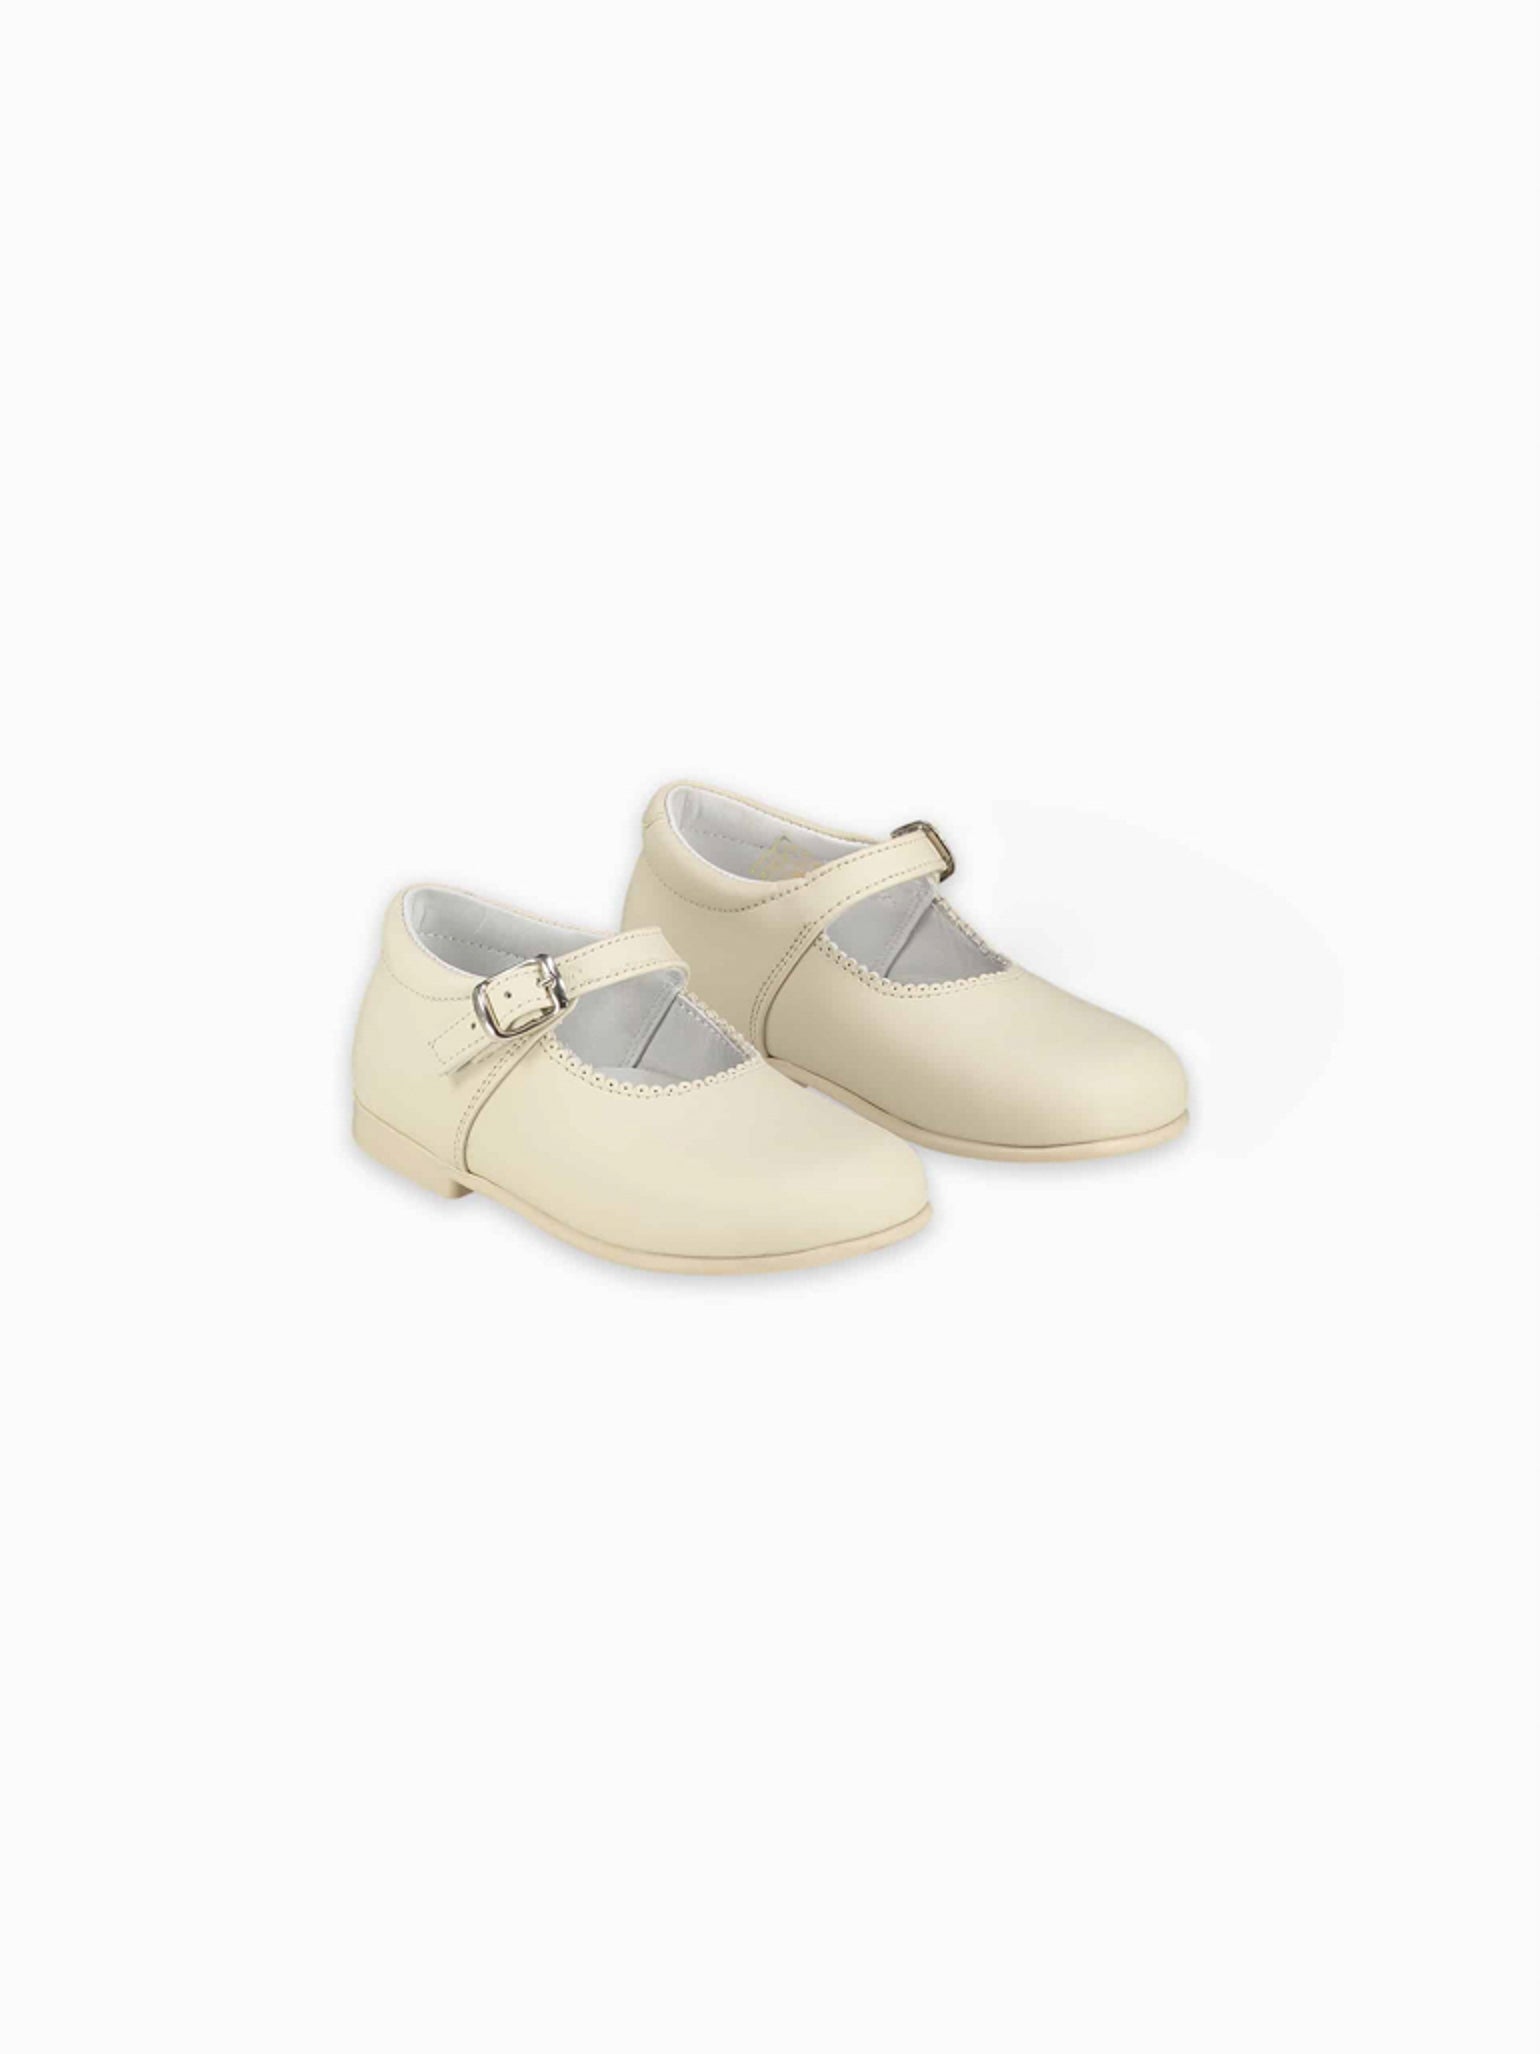 Ivory Leather Toddler Mary Jane Shoes